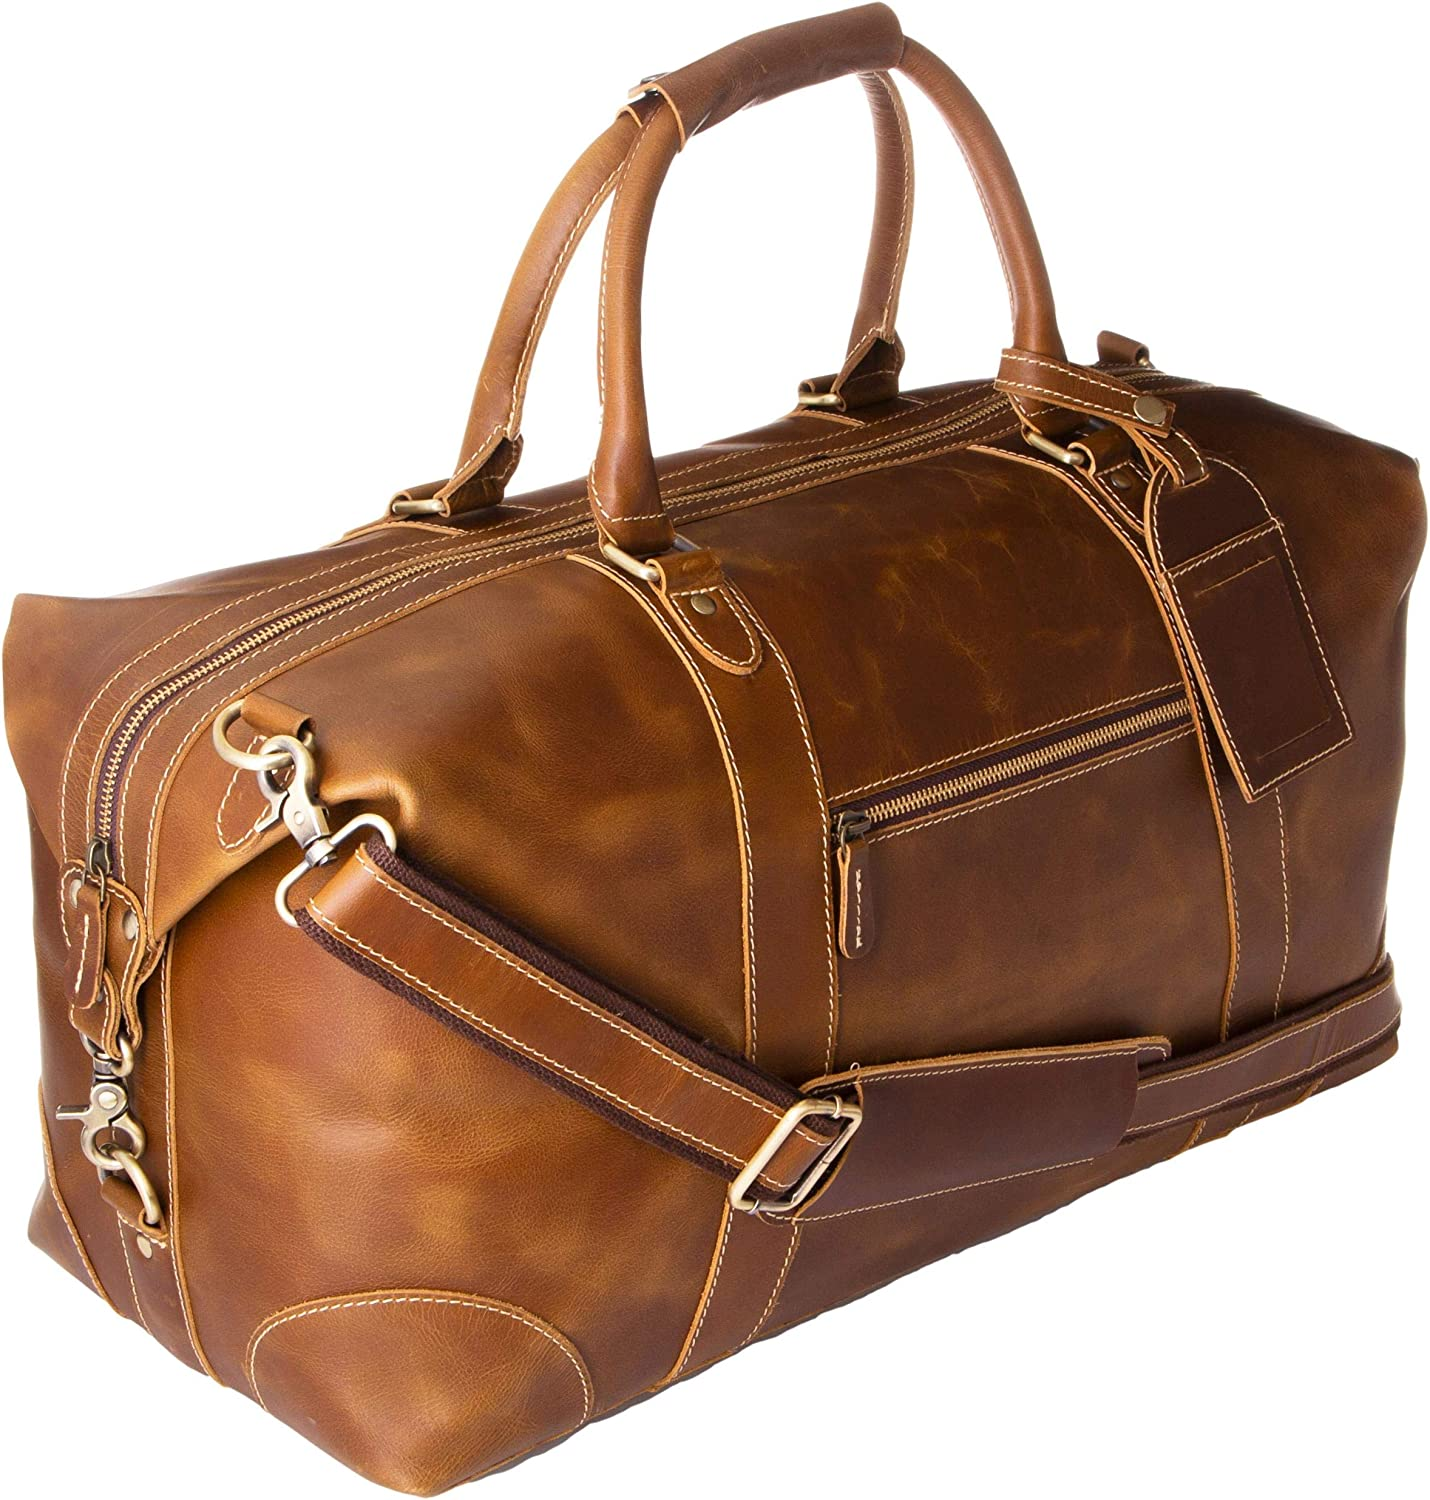 This Vera Bradley Duffel Bag Is 50% Off at Amazon